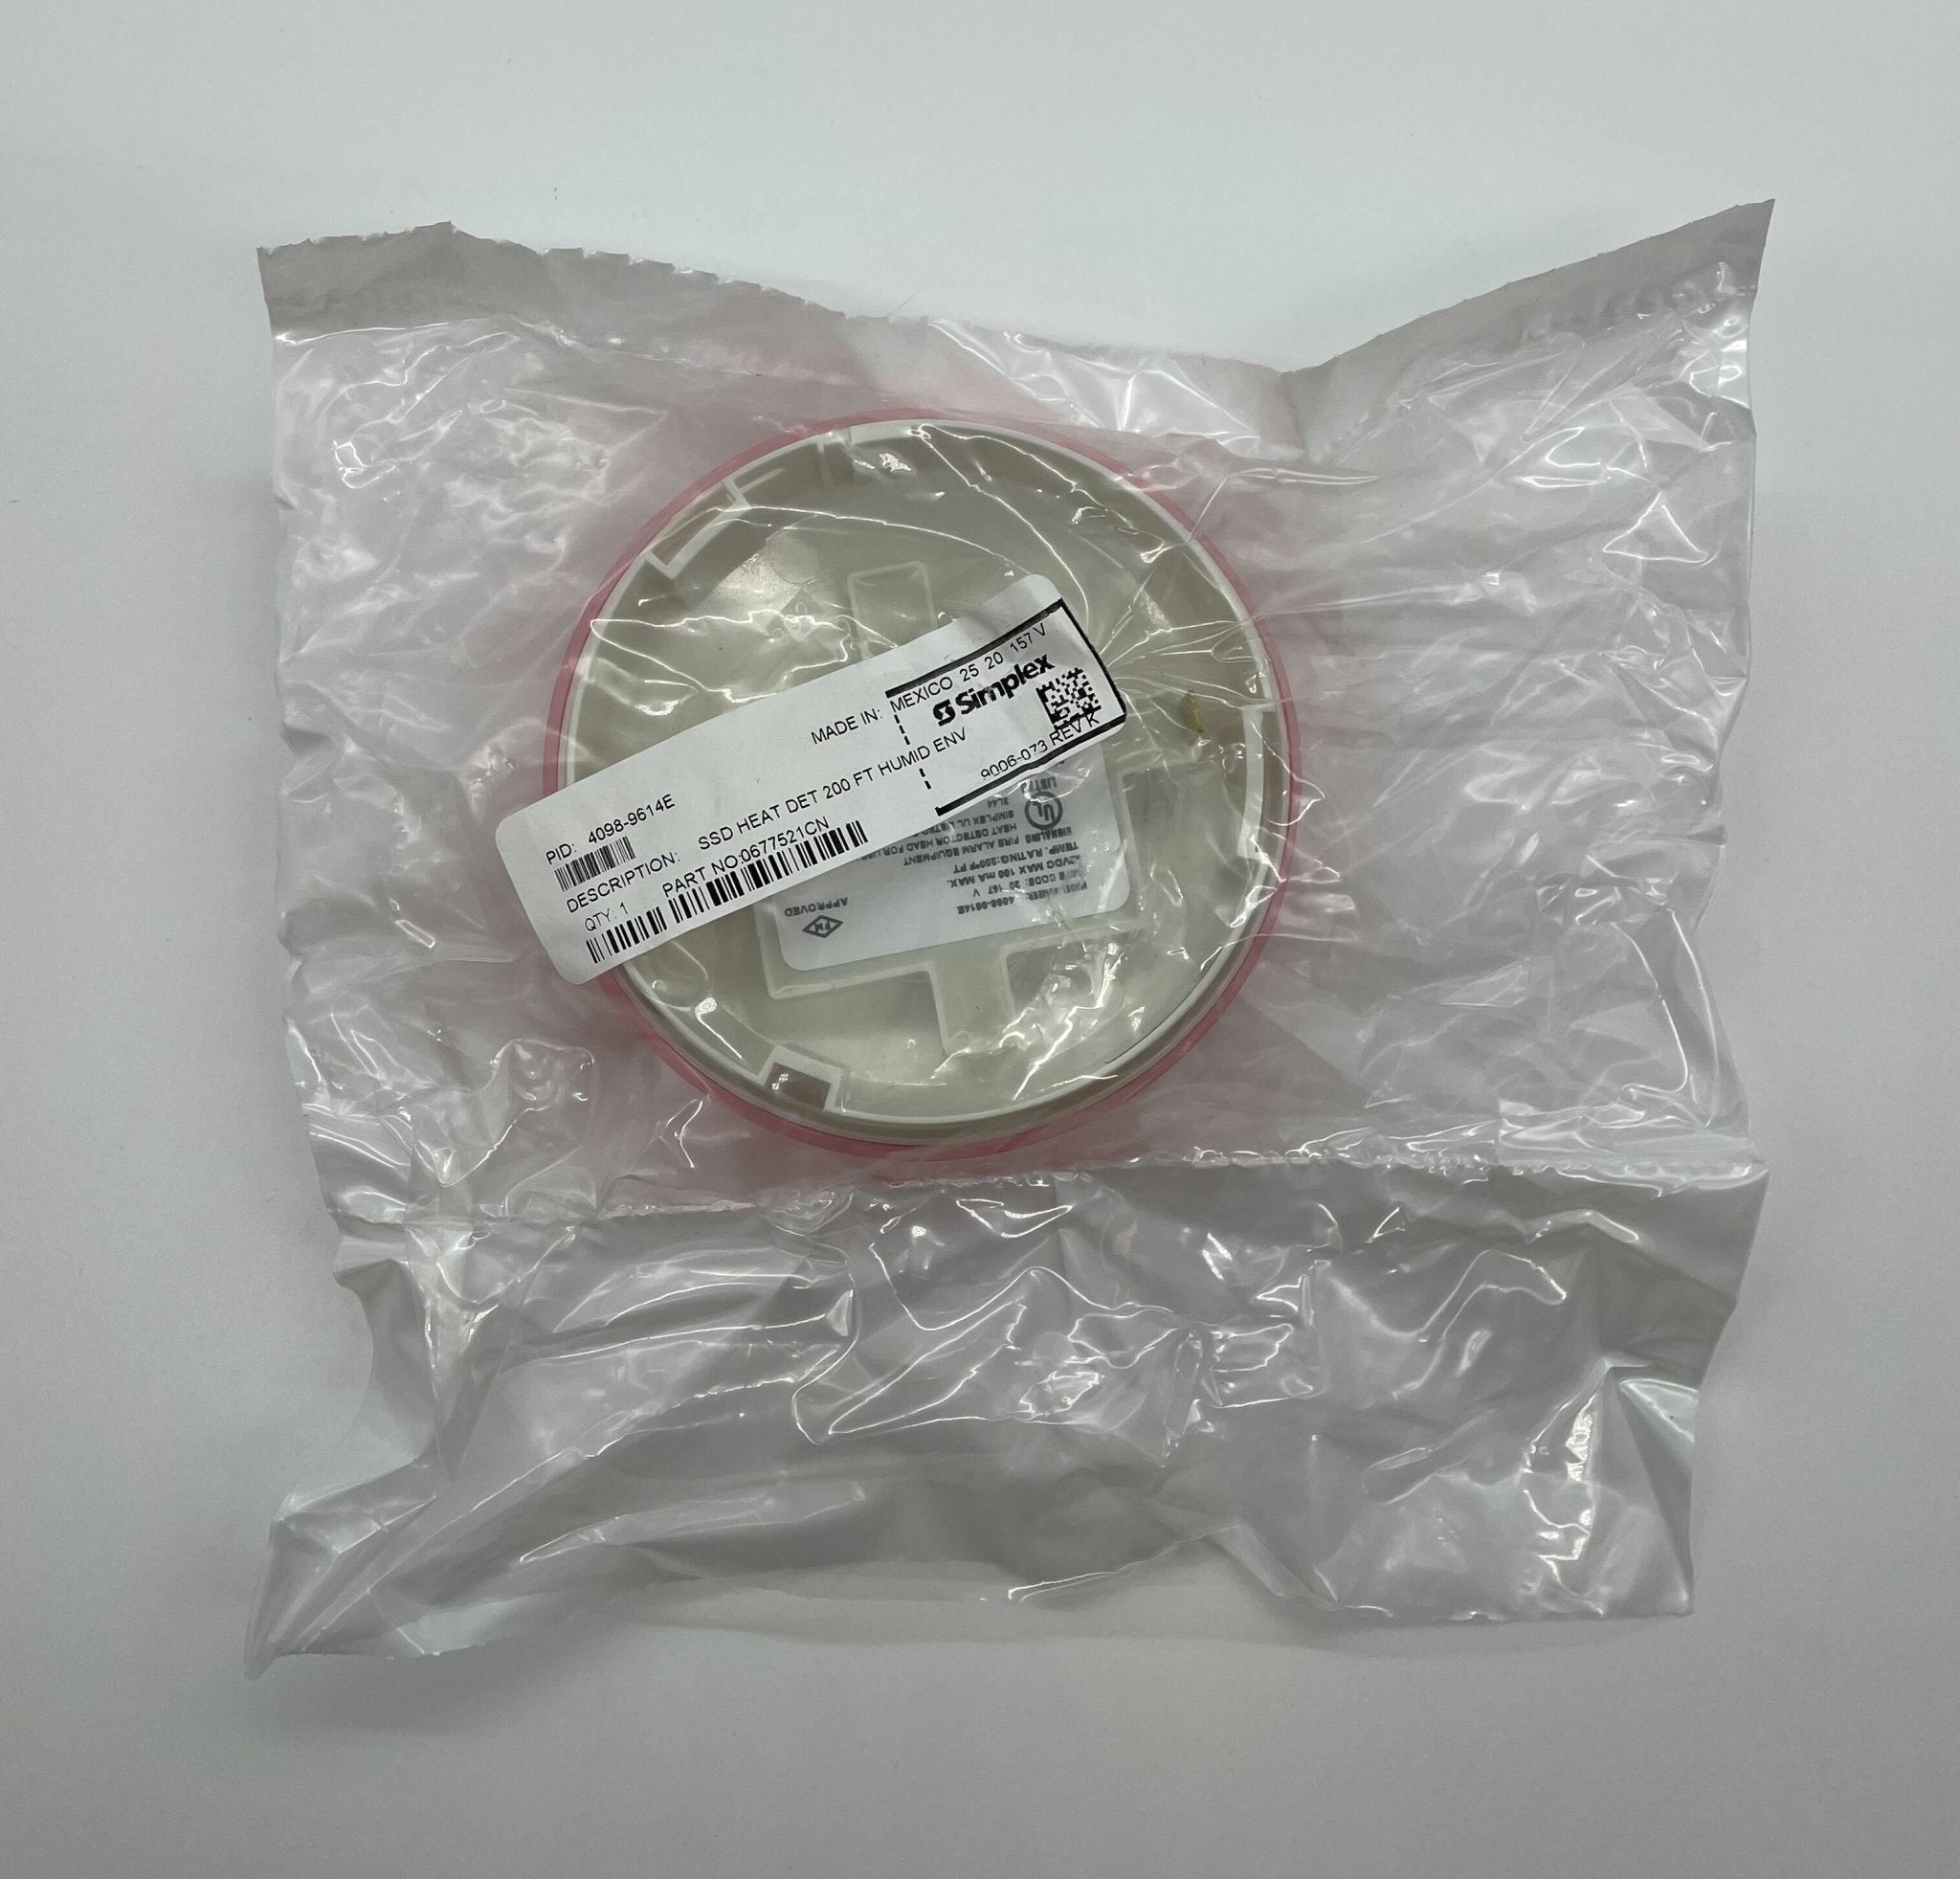 Simplex 4098-9614E Smoke Detector - The Fire Alarm Supplier